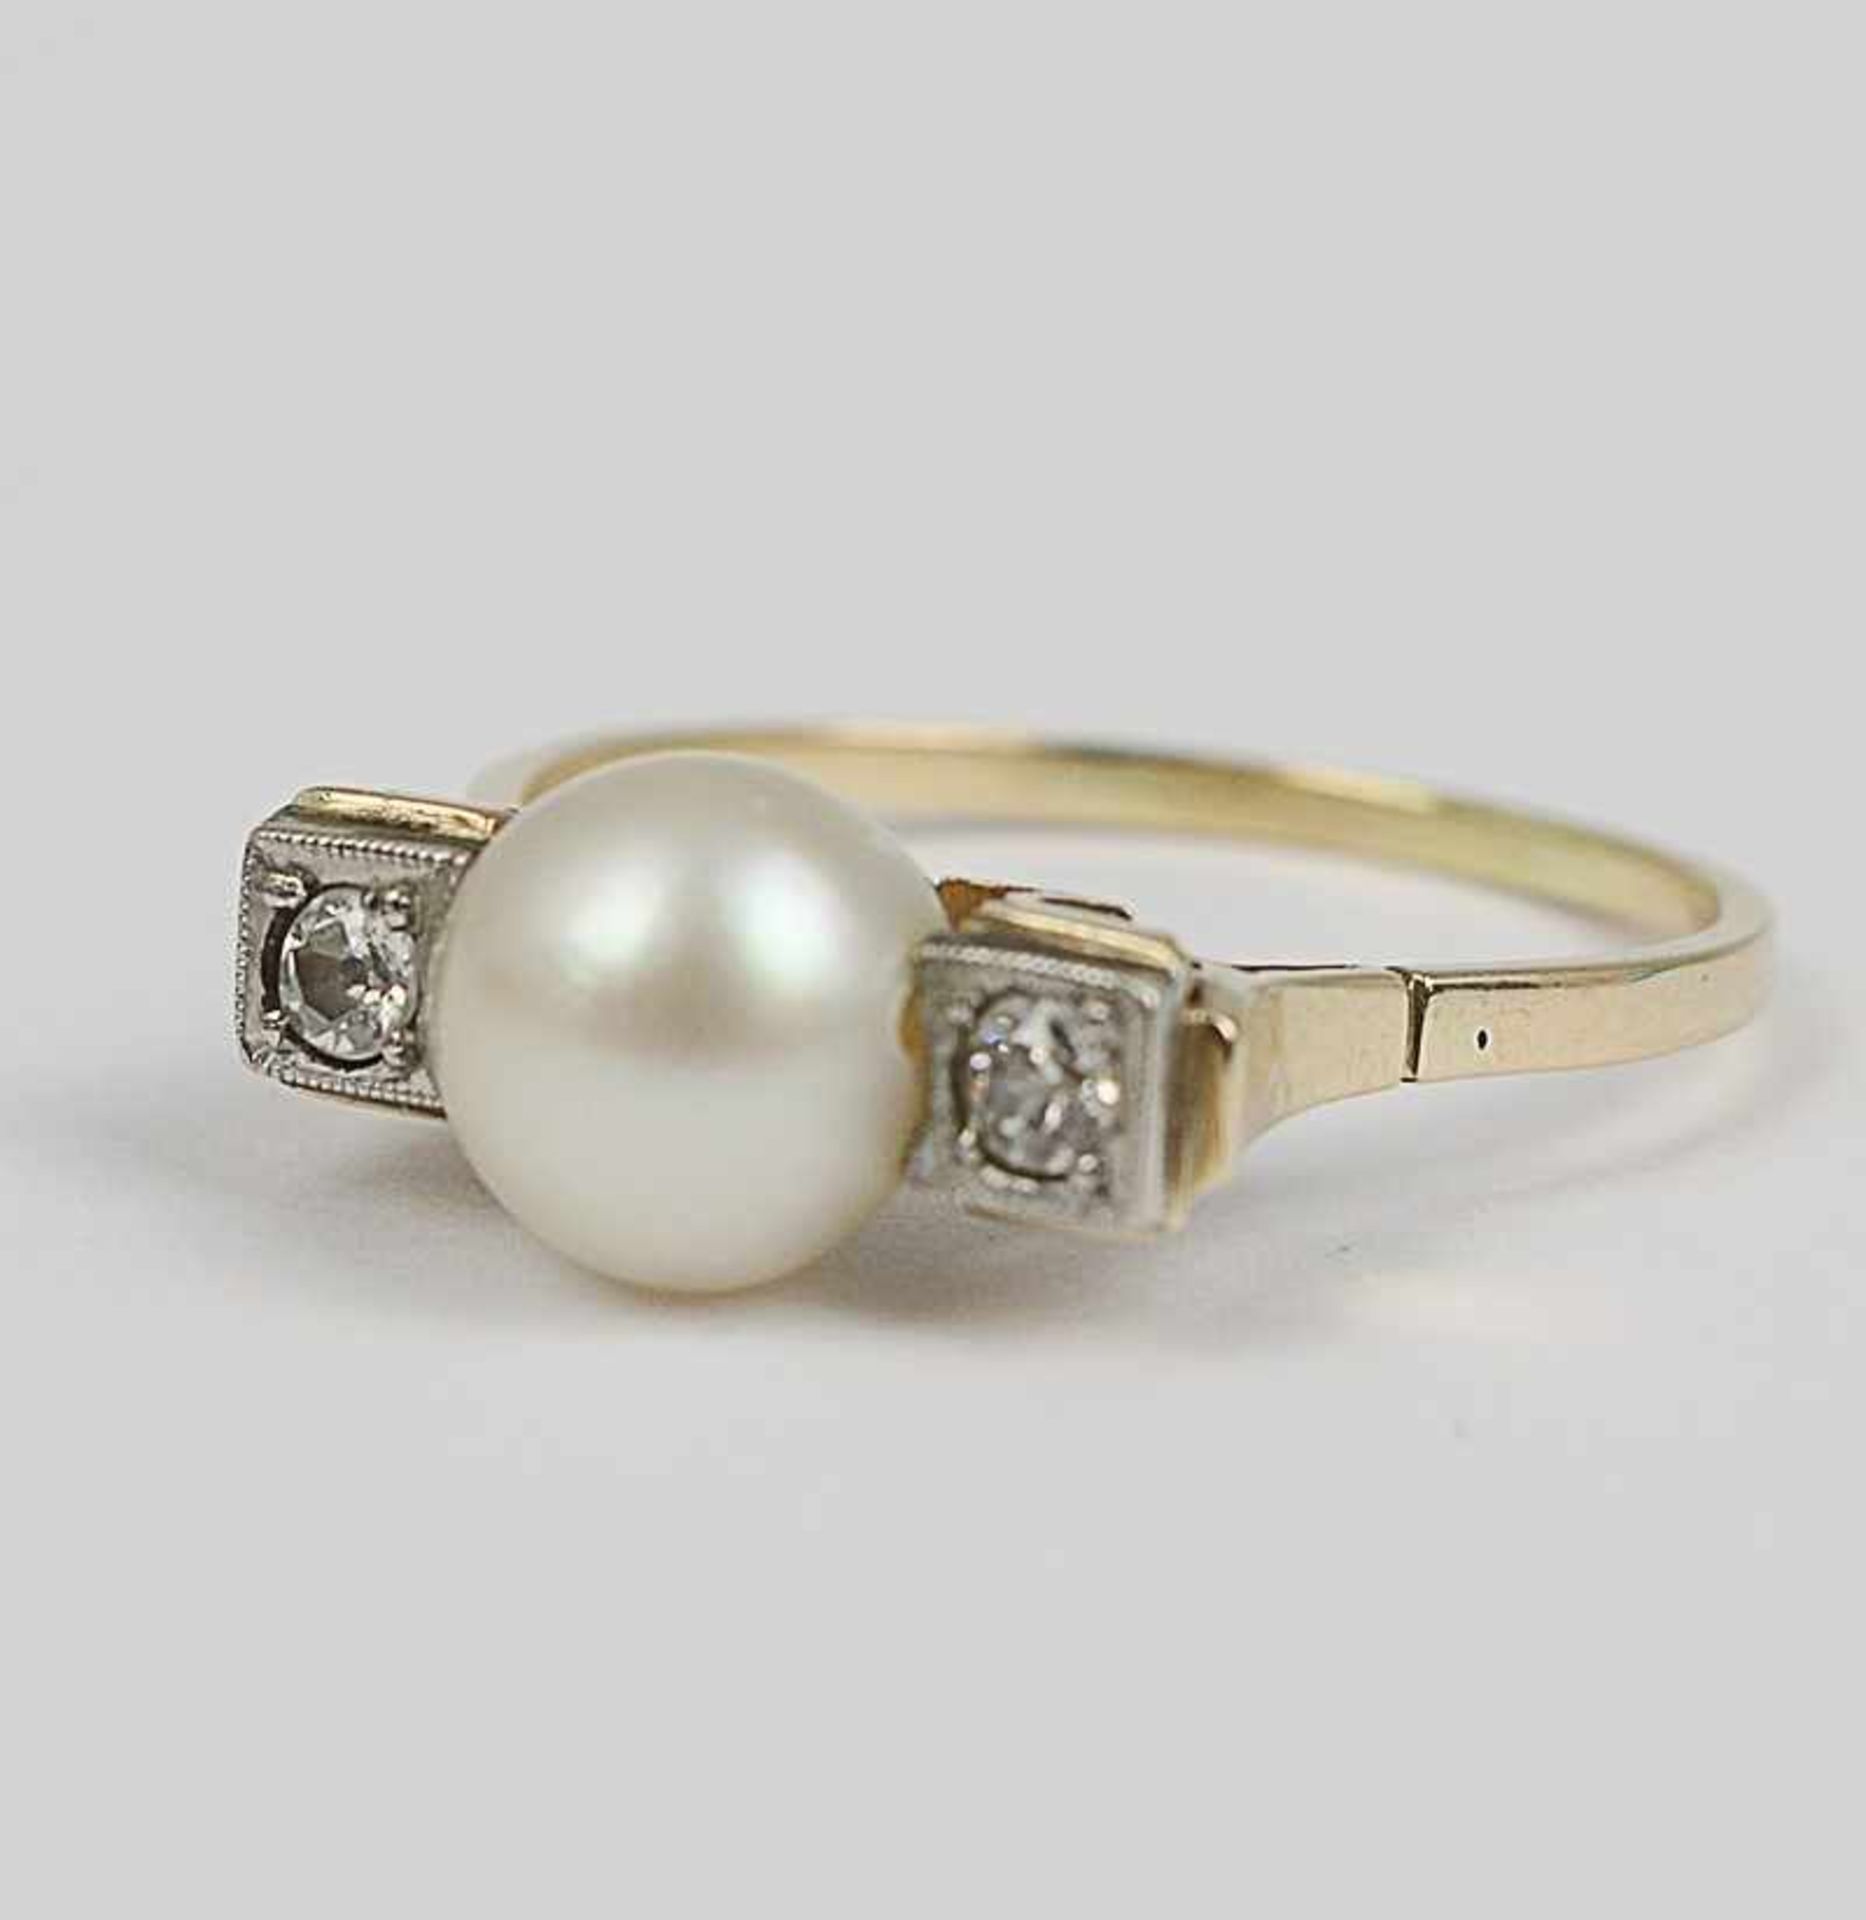 Perlen/Diamanten - Damenring Art déco, GG 585, rechteckiger Ringkopf besetzt mit einer Perle, Dca.